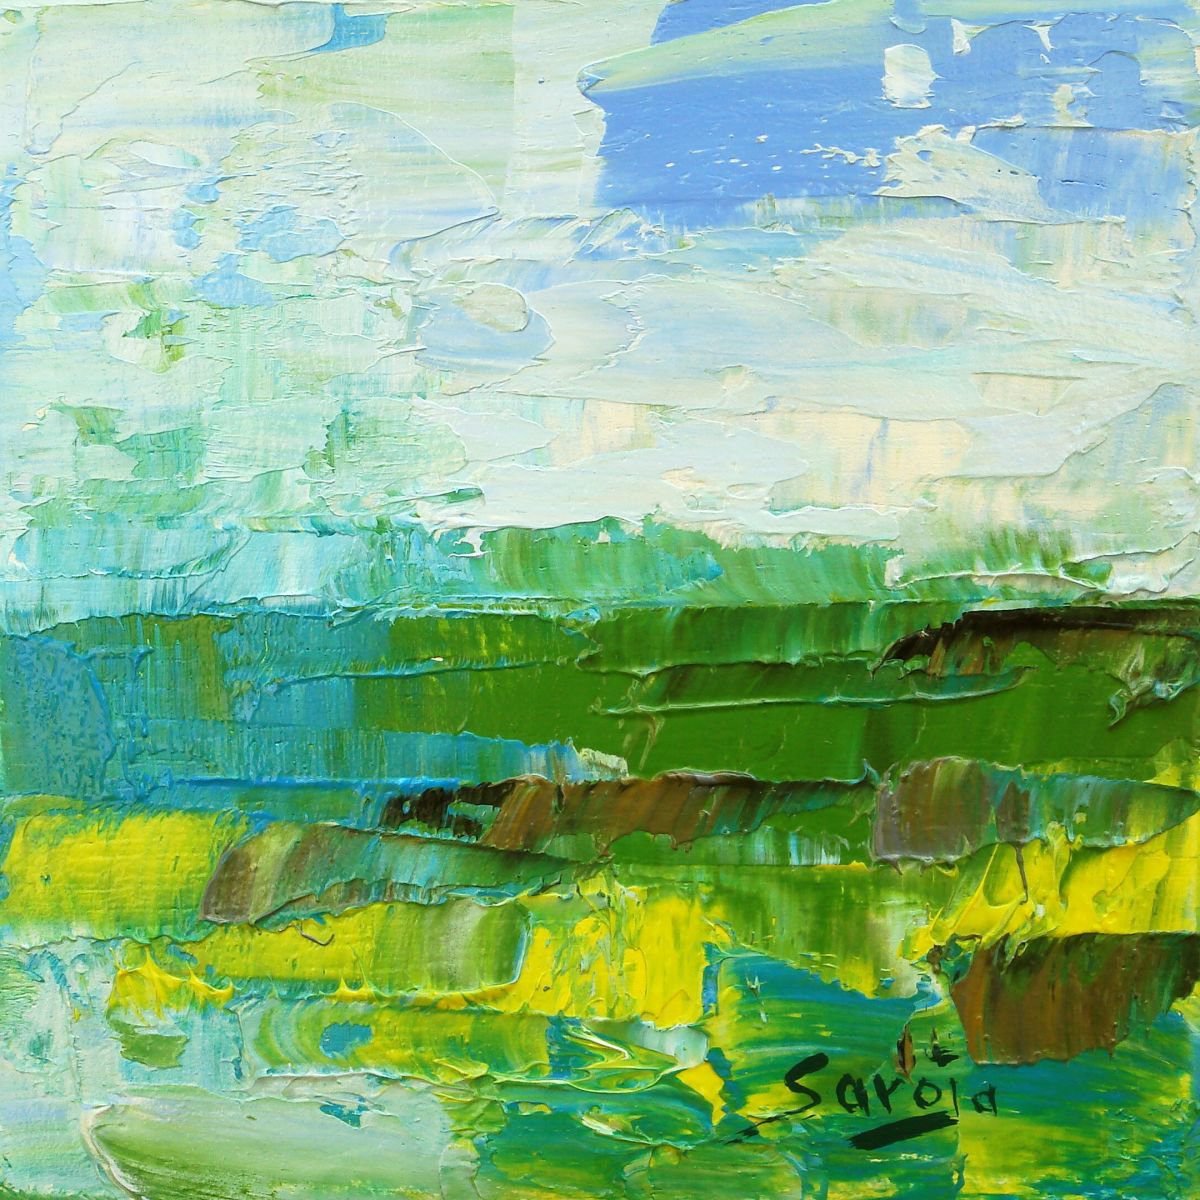 ref#:1154-10Q -10x10cm=3.94x3.94 - nfr. Green Landscape 4 by Saroja La Colorista